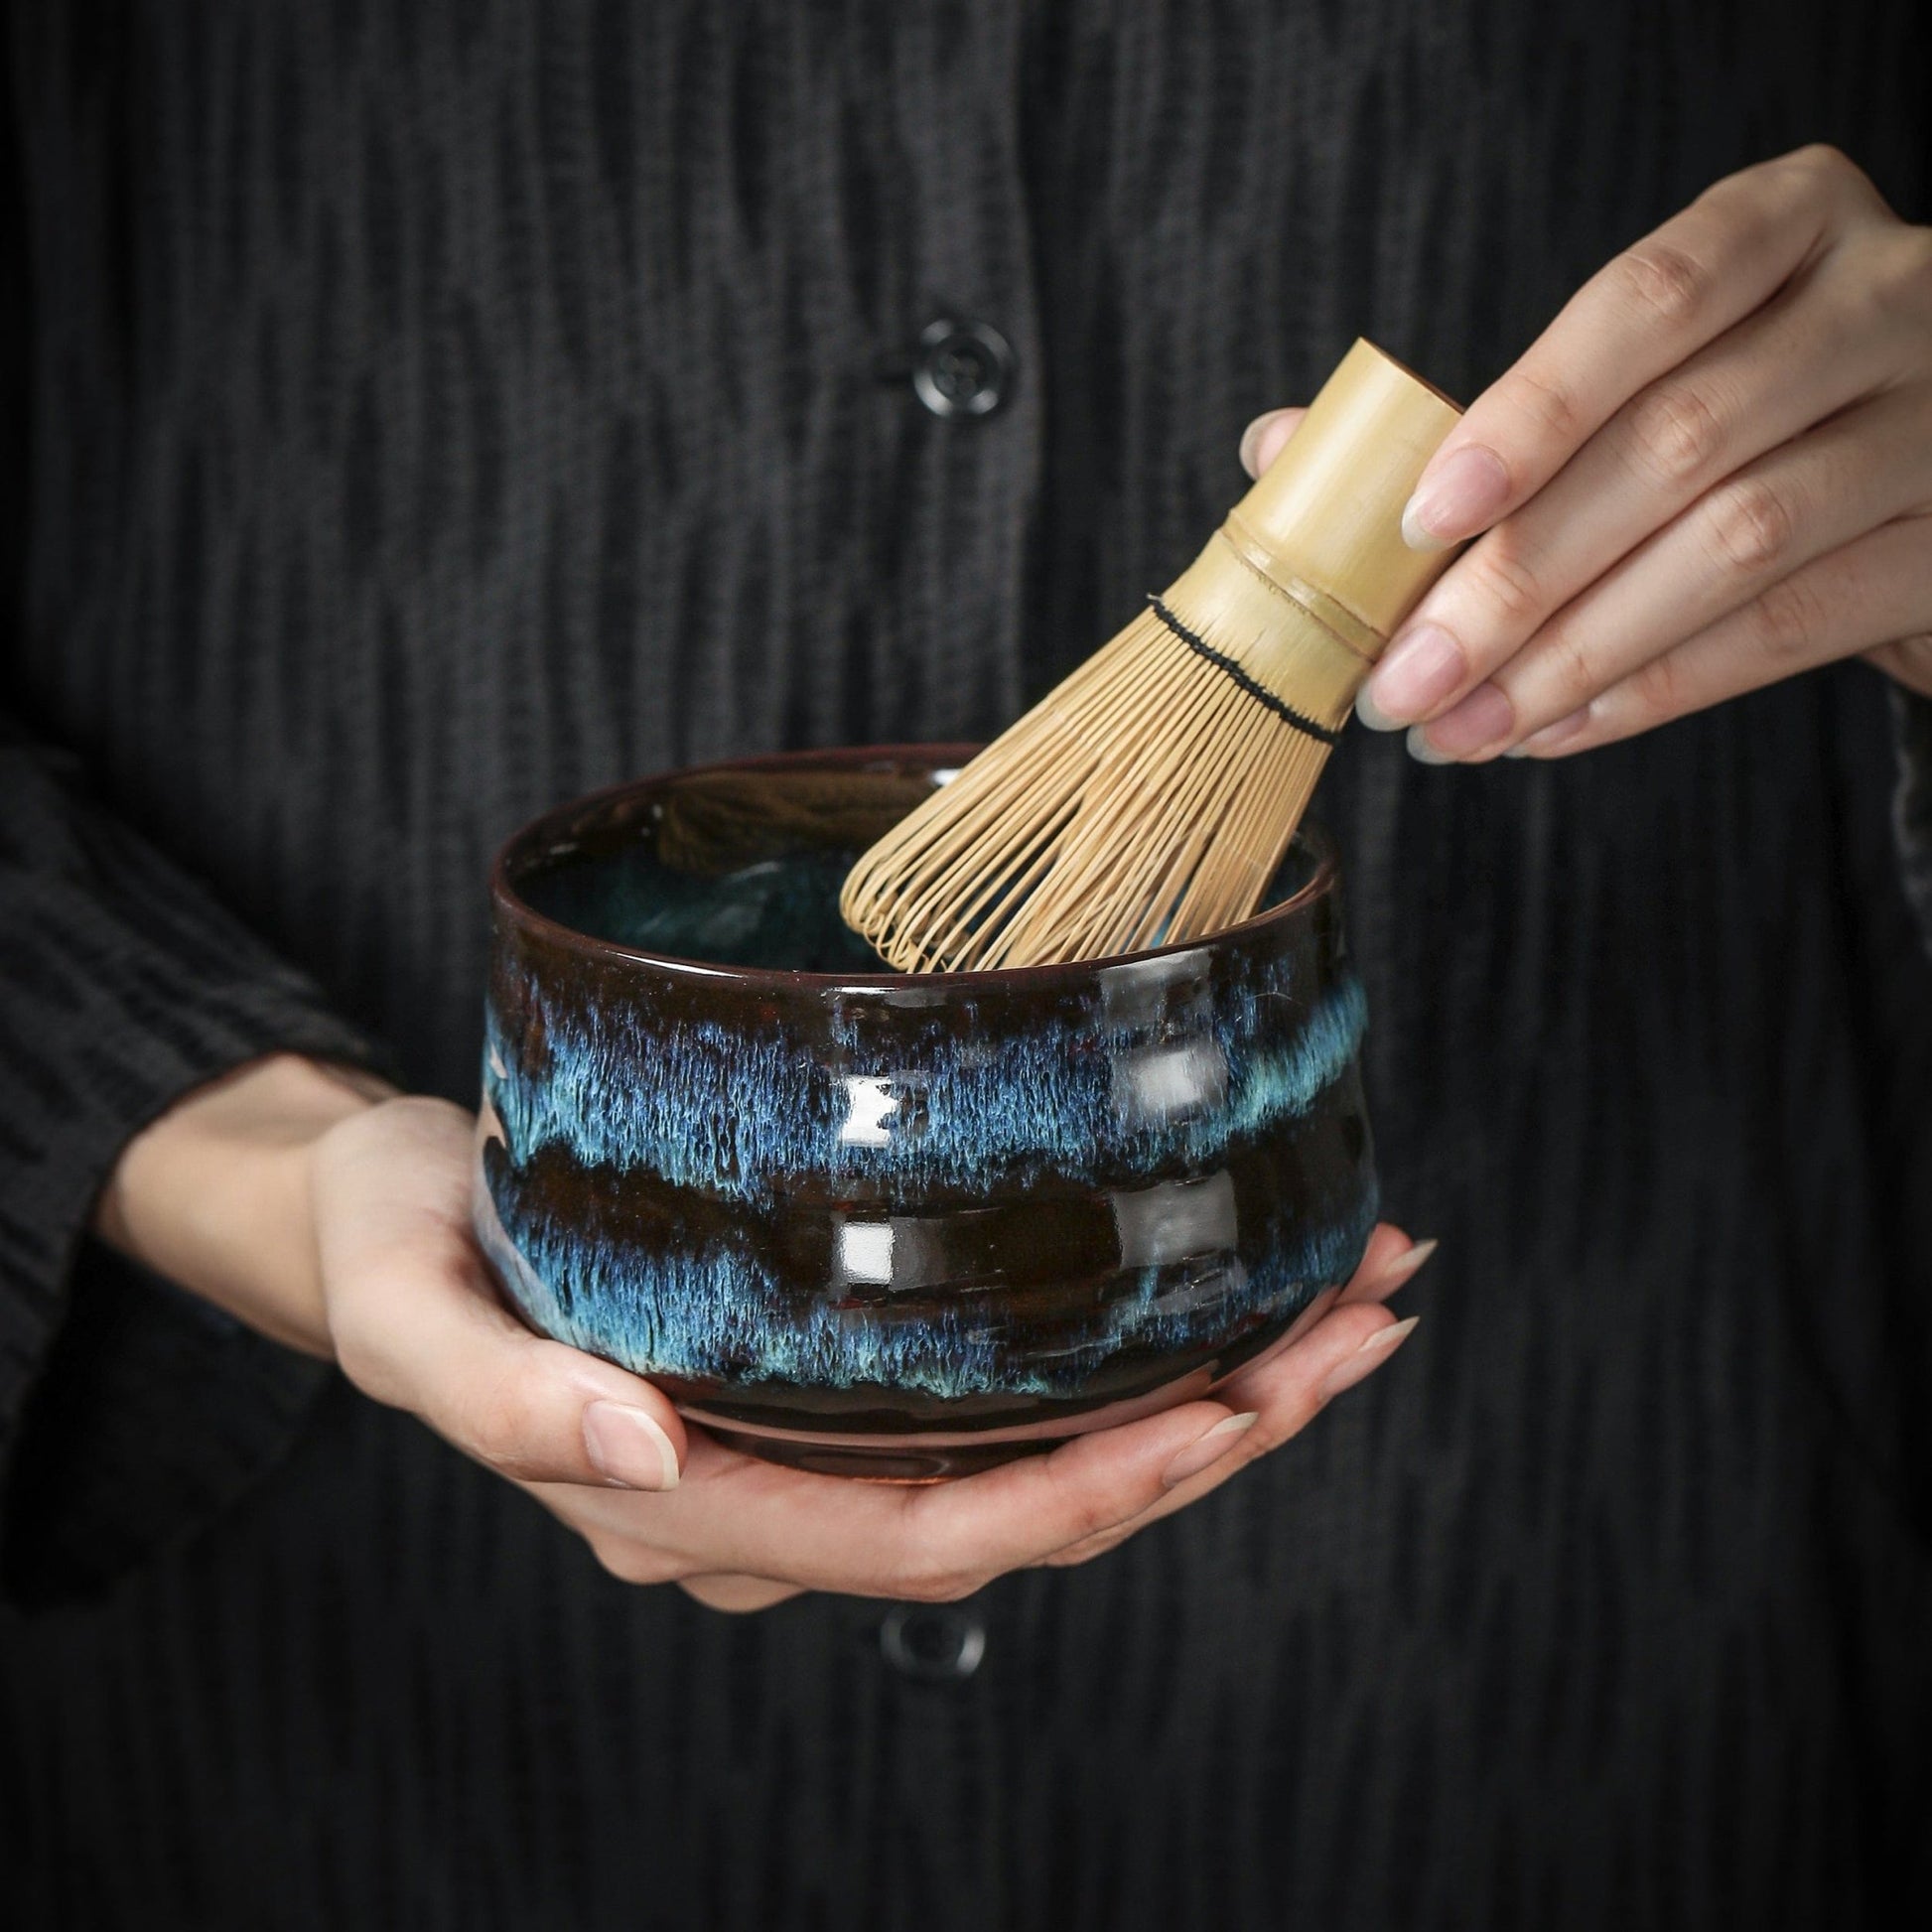 Japanese Tea Set (7pcs) Matcha Whisk Set Matcha Bowl with Pouring Spout  Bamboo Matcha Whisk (chasen) Scoop (chashaku) Matcha Whisk Holder Tea  Making